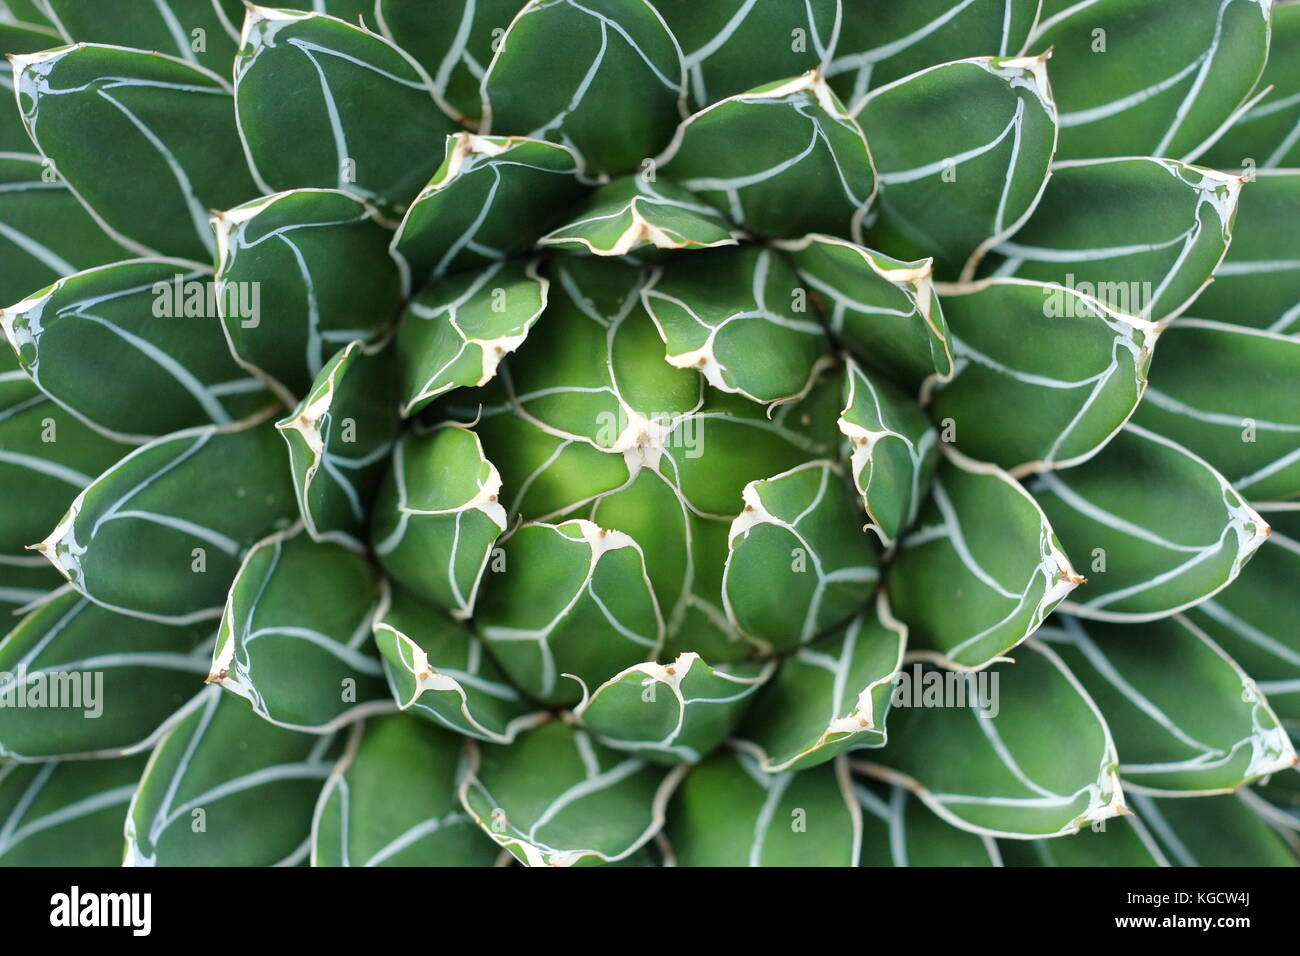 Queen Victoria agave (Agave Victoria reginae), a drought tolerant succulent plant Stock Photo